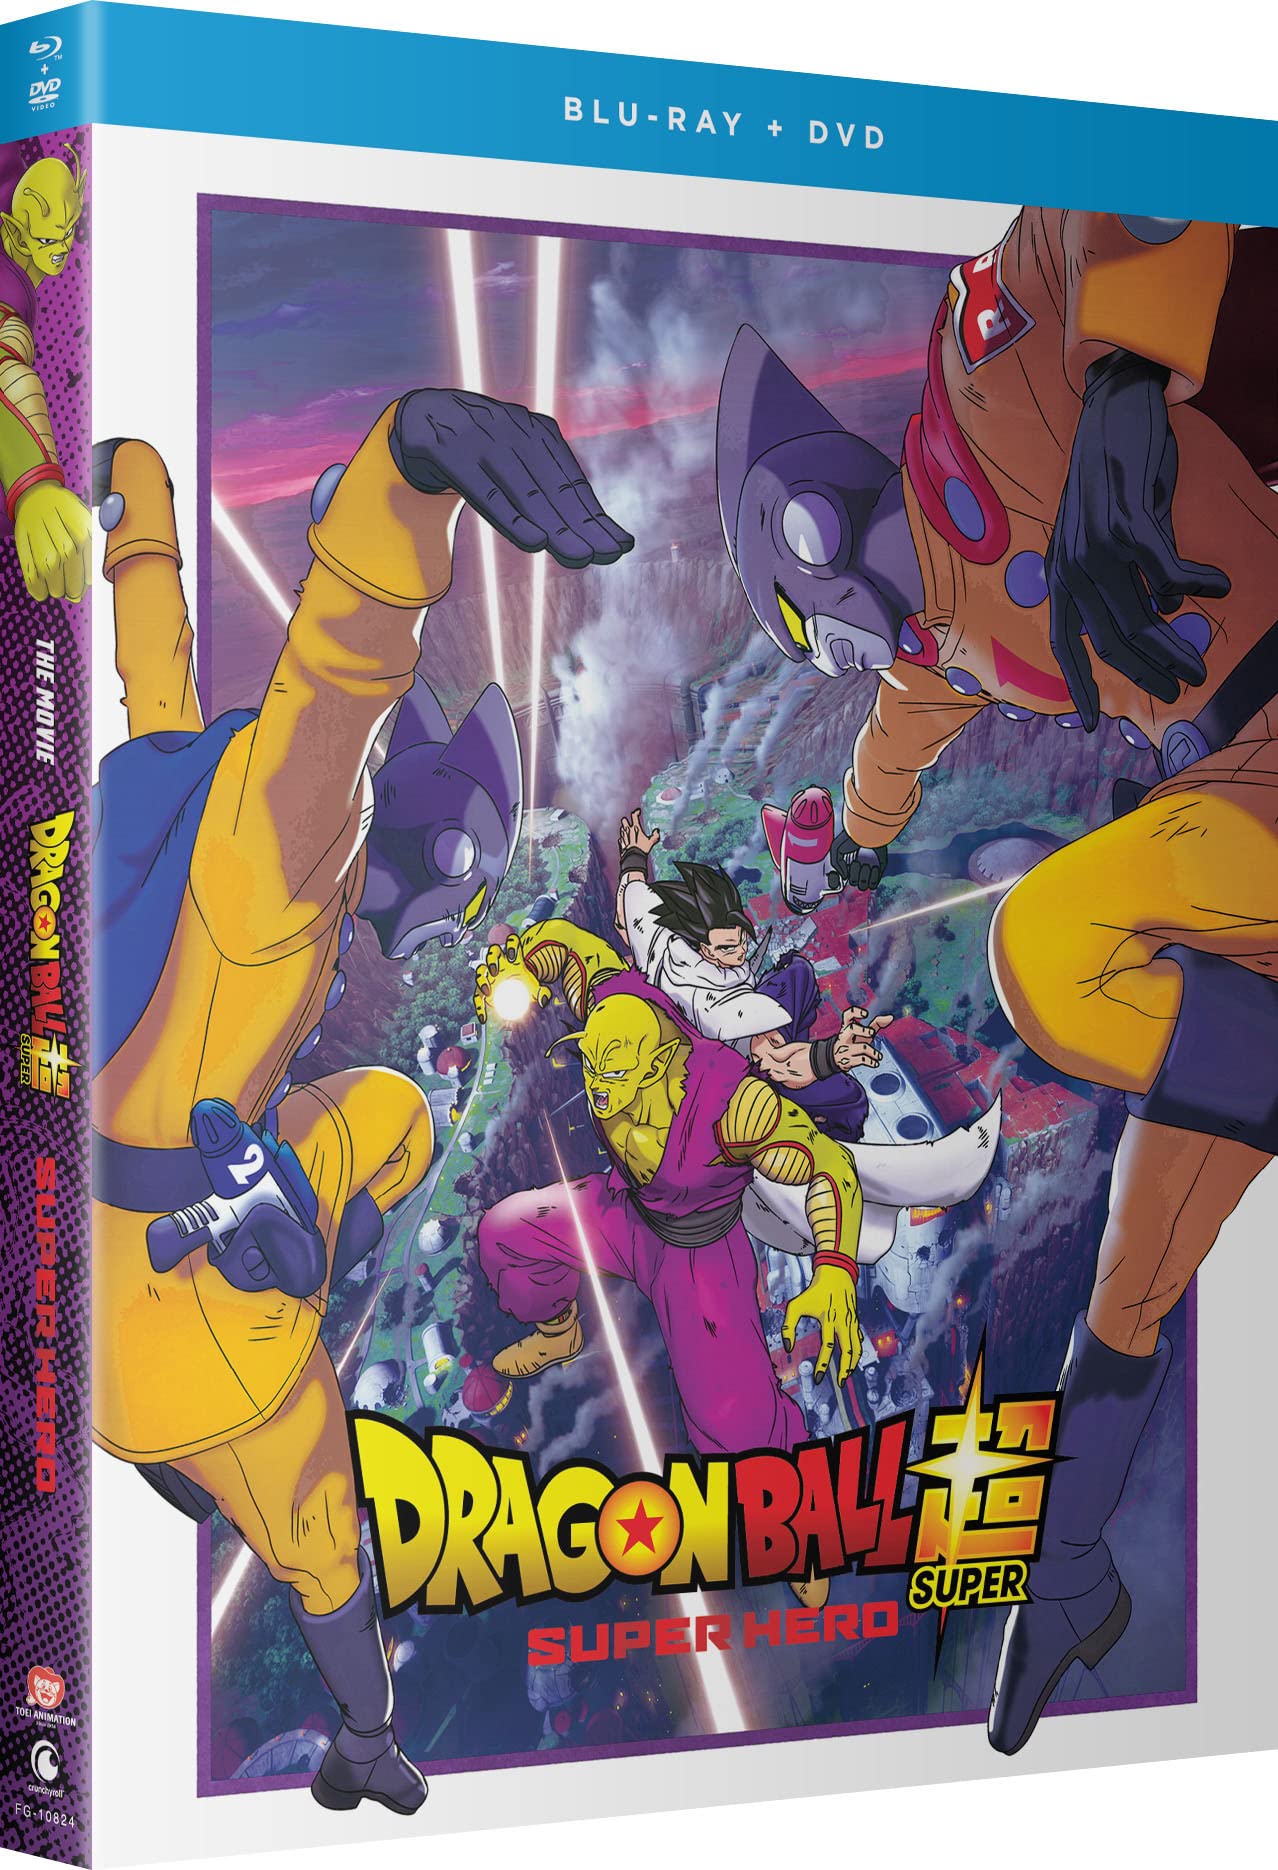 Dragon Ball Super (Super Hero): Blu-ray + DVD $14 or Exclusive Steelbook 4K UHD + Blu-ray $26.96 + Free Shipping w/ Prime or on Orders $35+